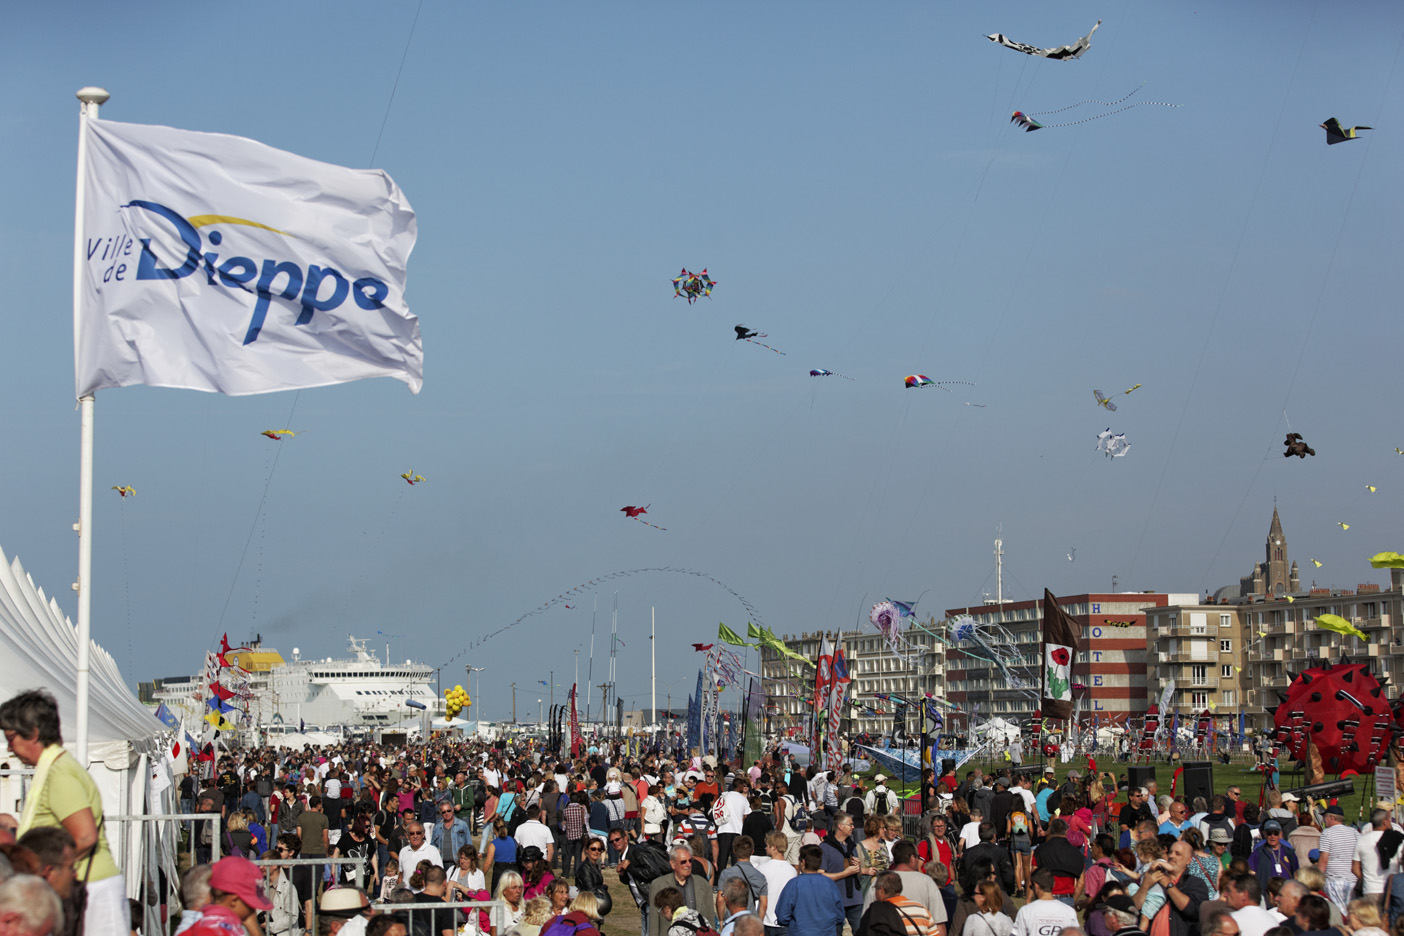 Dieppe Kite Festival